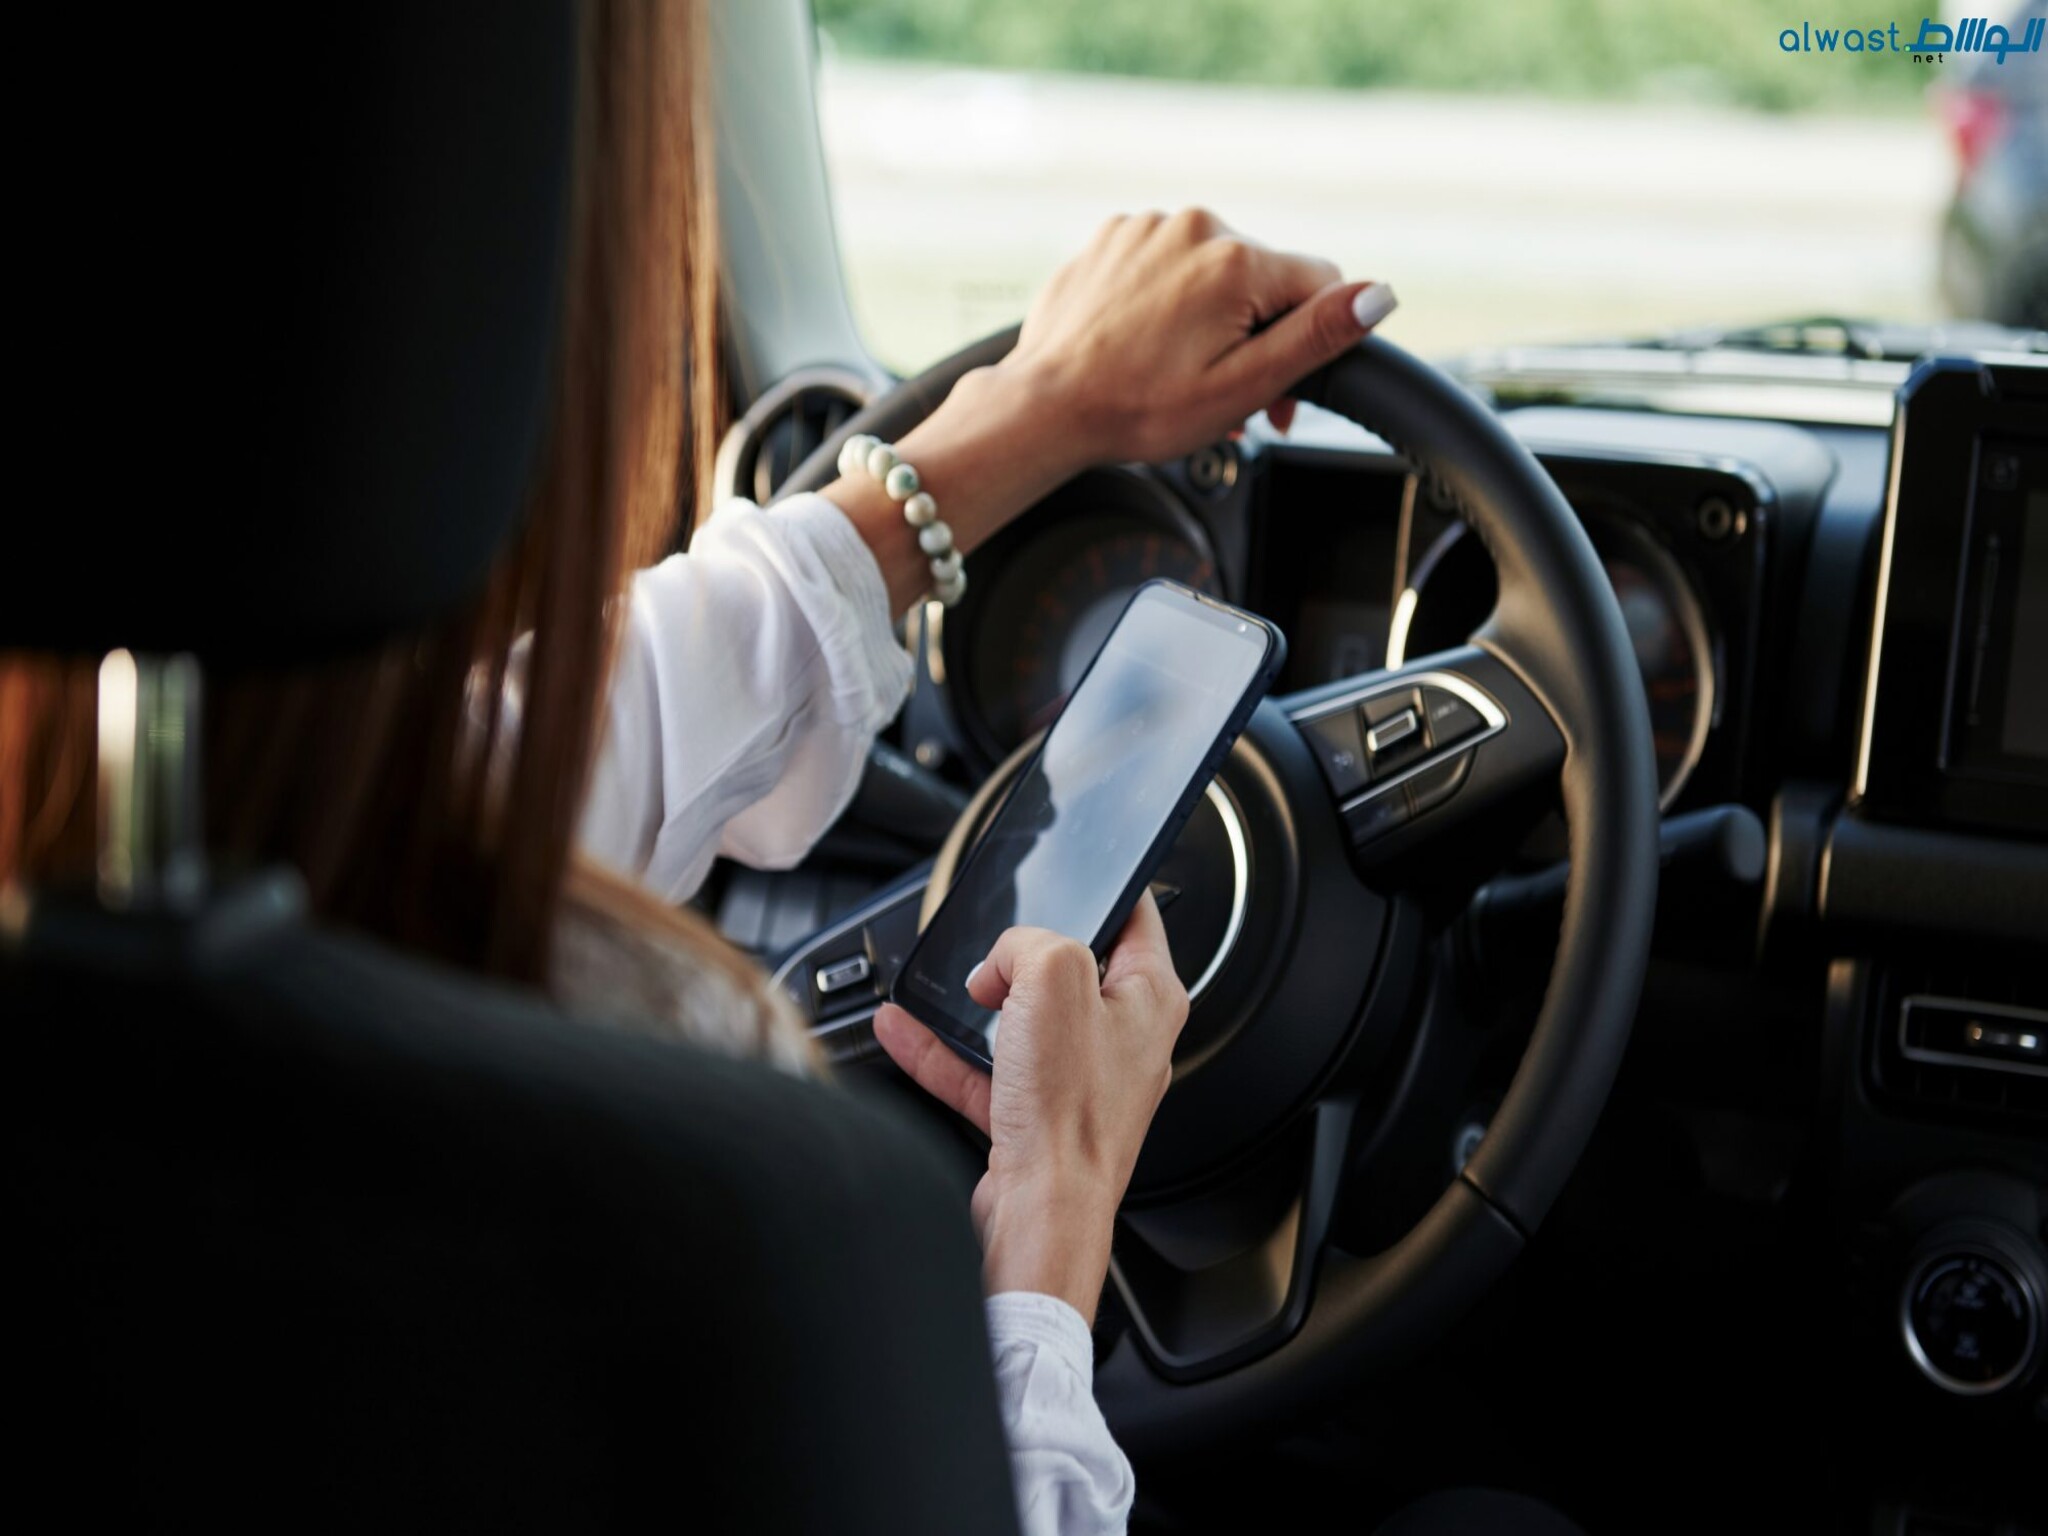 Qatar: New Radars to Track Seat Belt and Phone Use Violations Sep 3rd